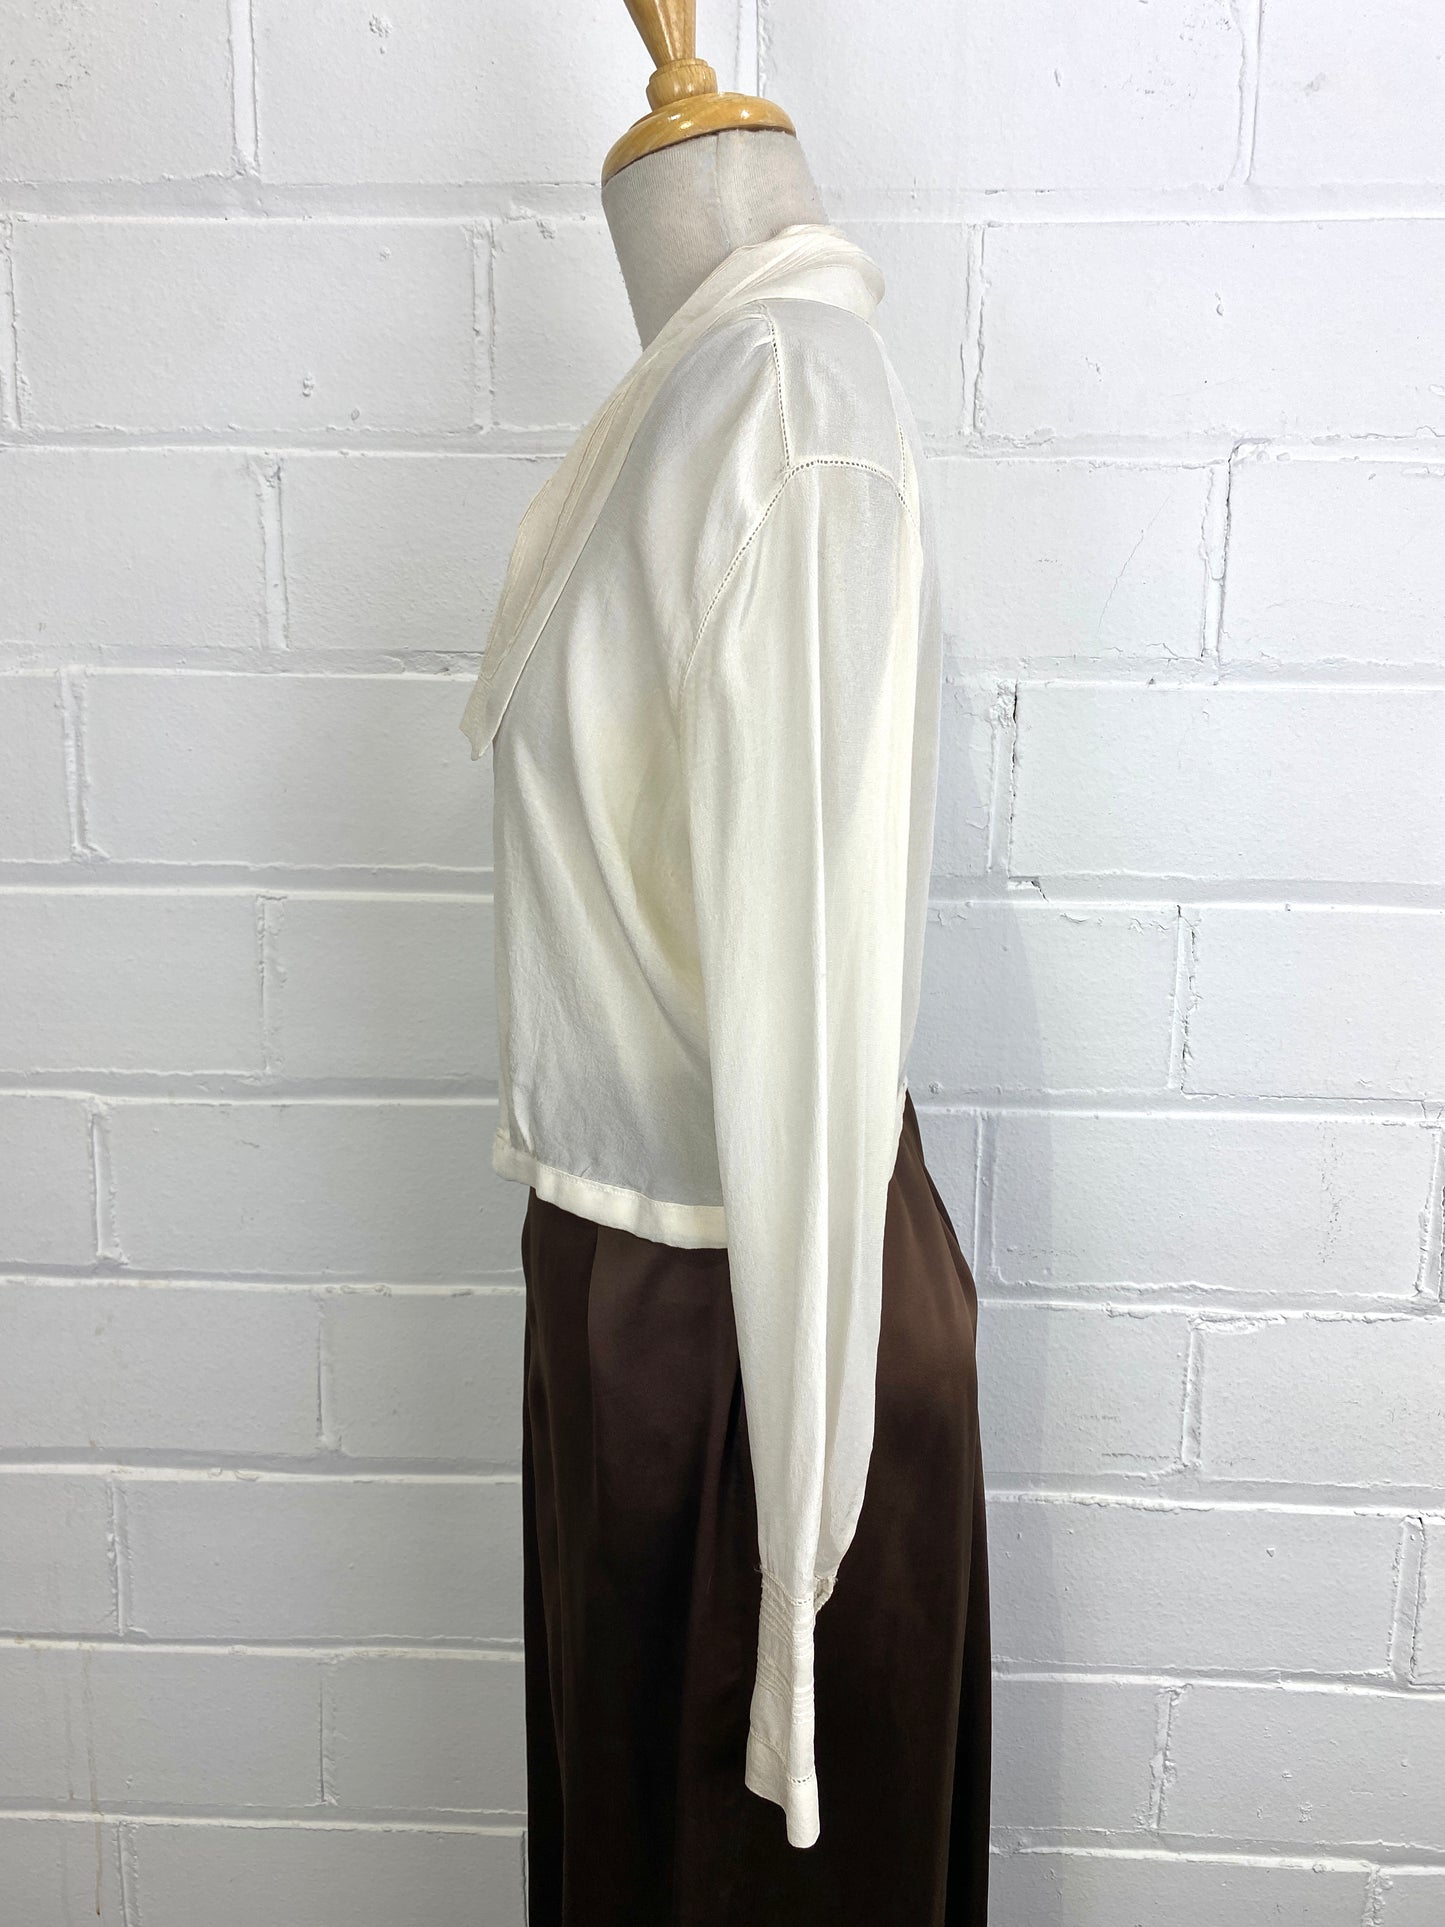 Vintage 1920s Long Sleeve Ivory Silk Blouse with Collar, Medium 